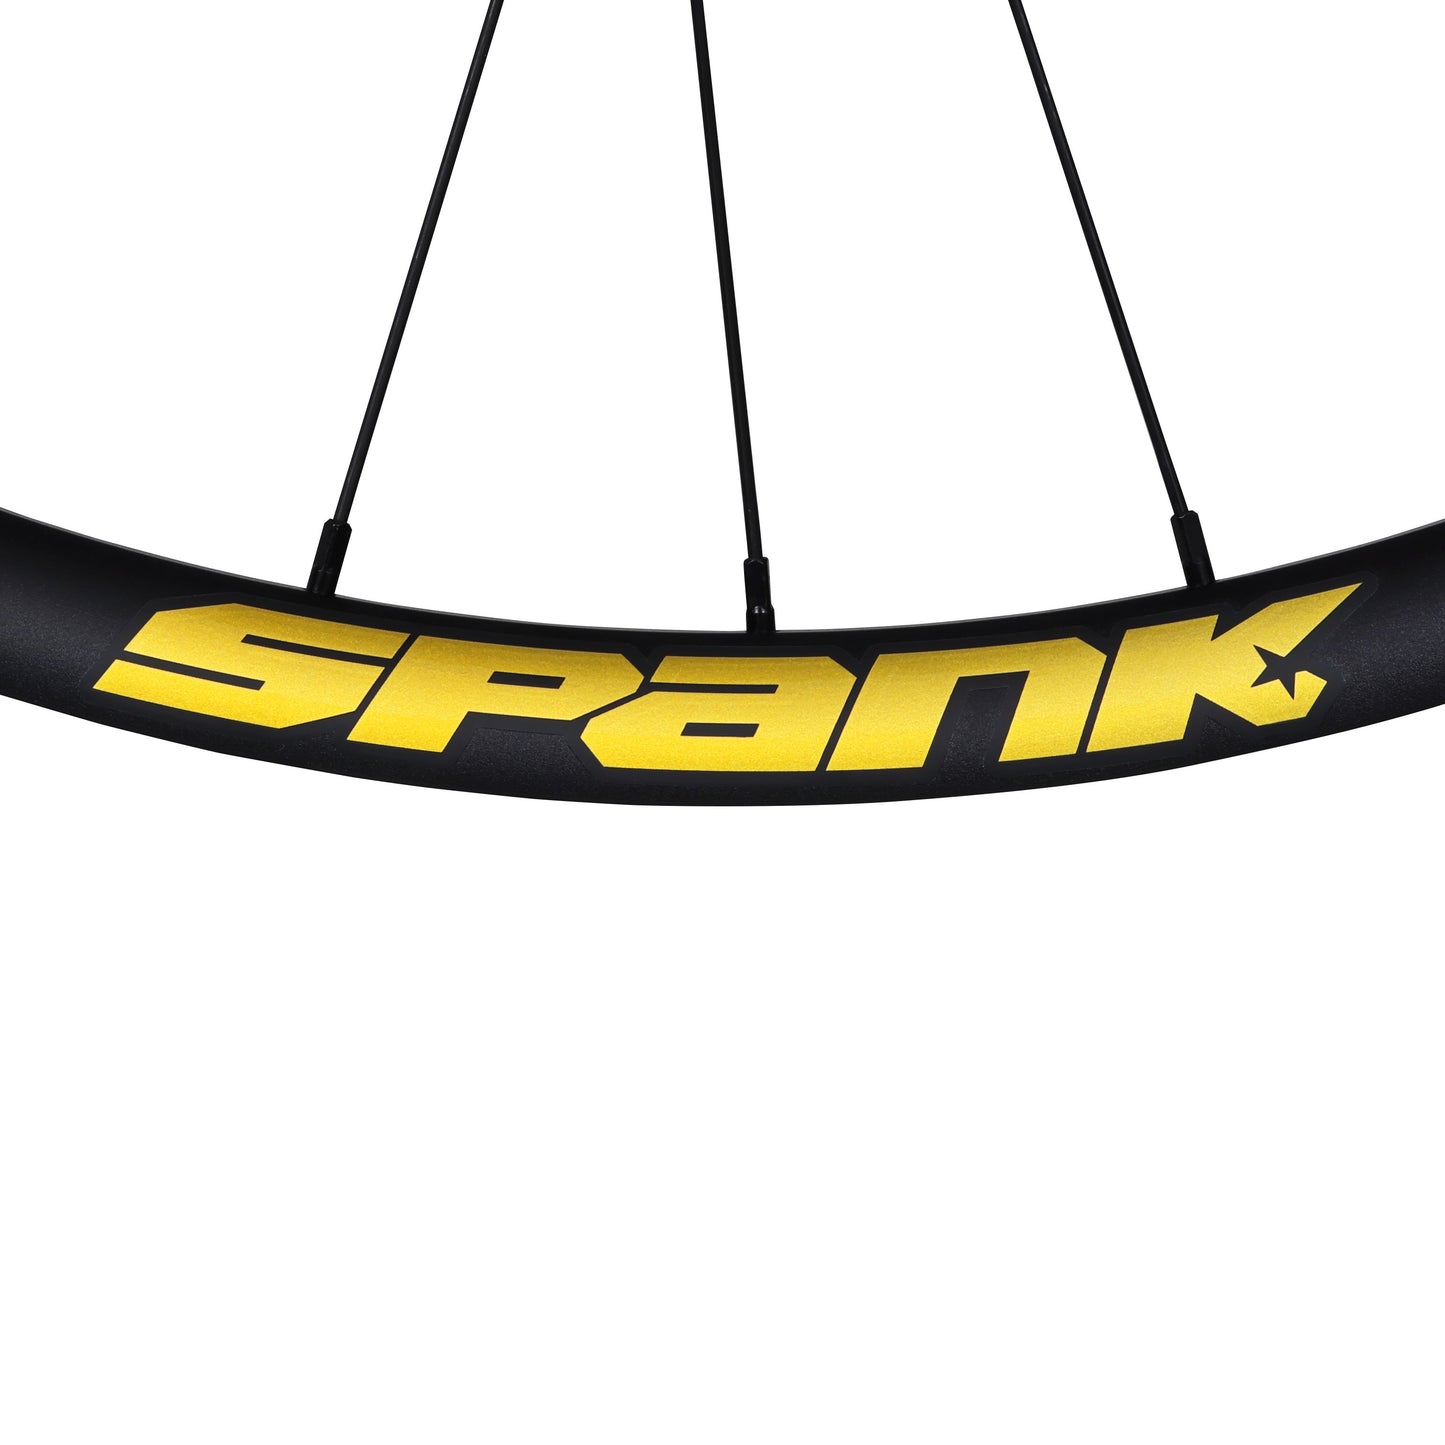 Spank SPANK Rim Decal kits - Hubs and Parts - Bicycle Warehouse